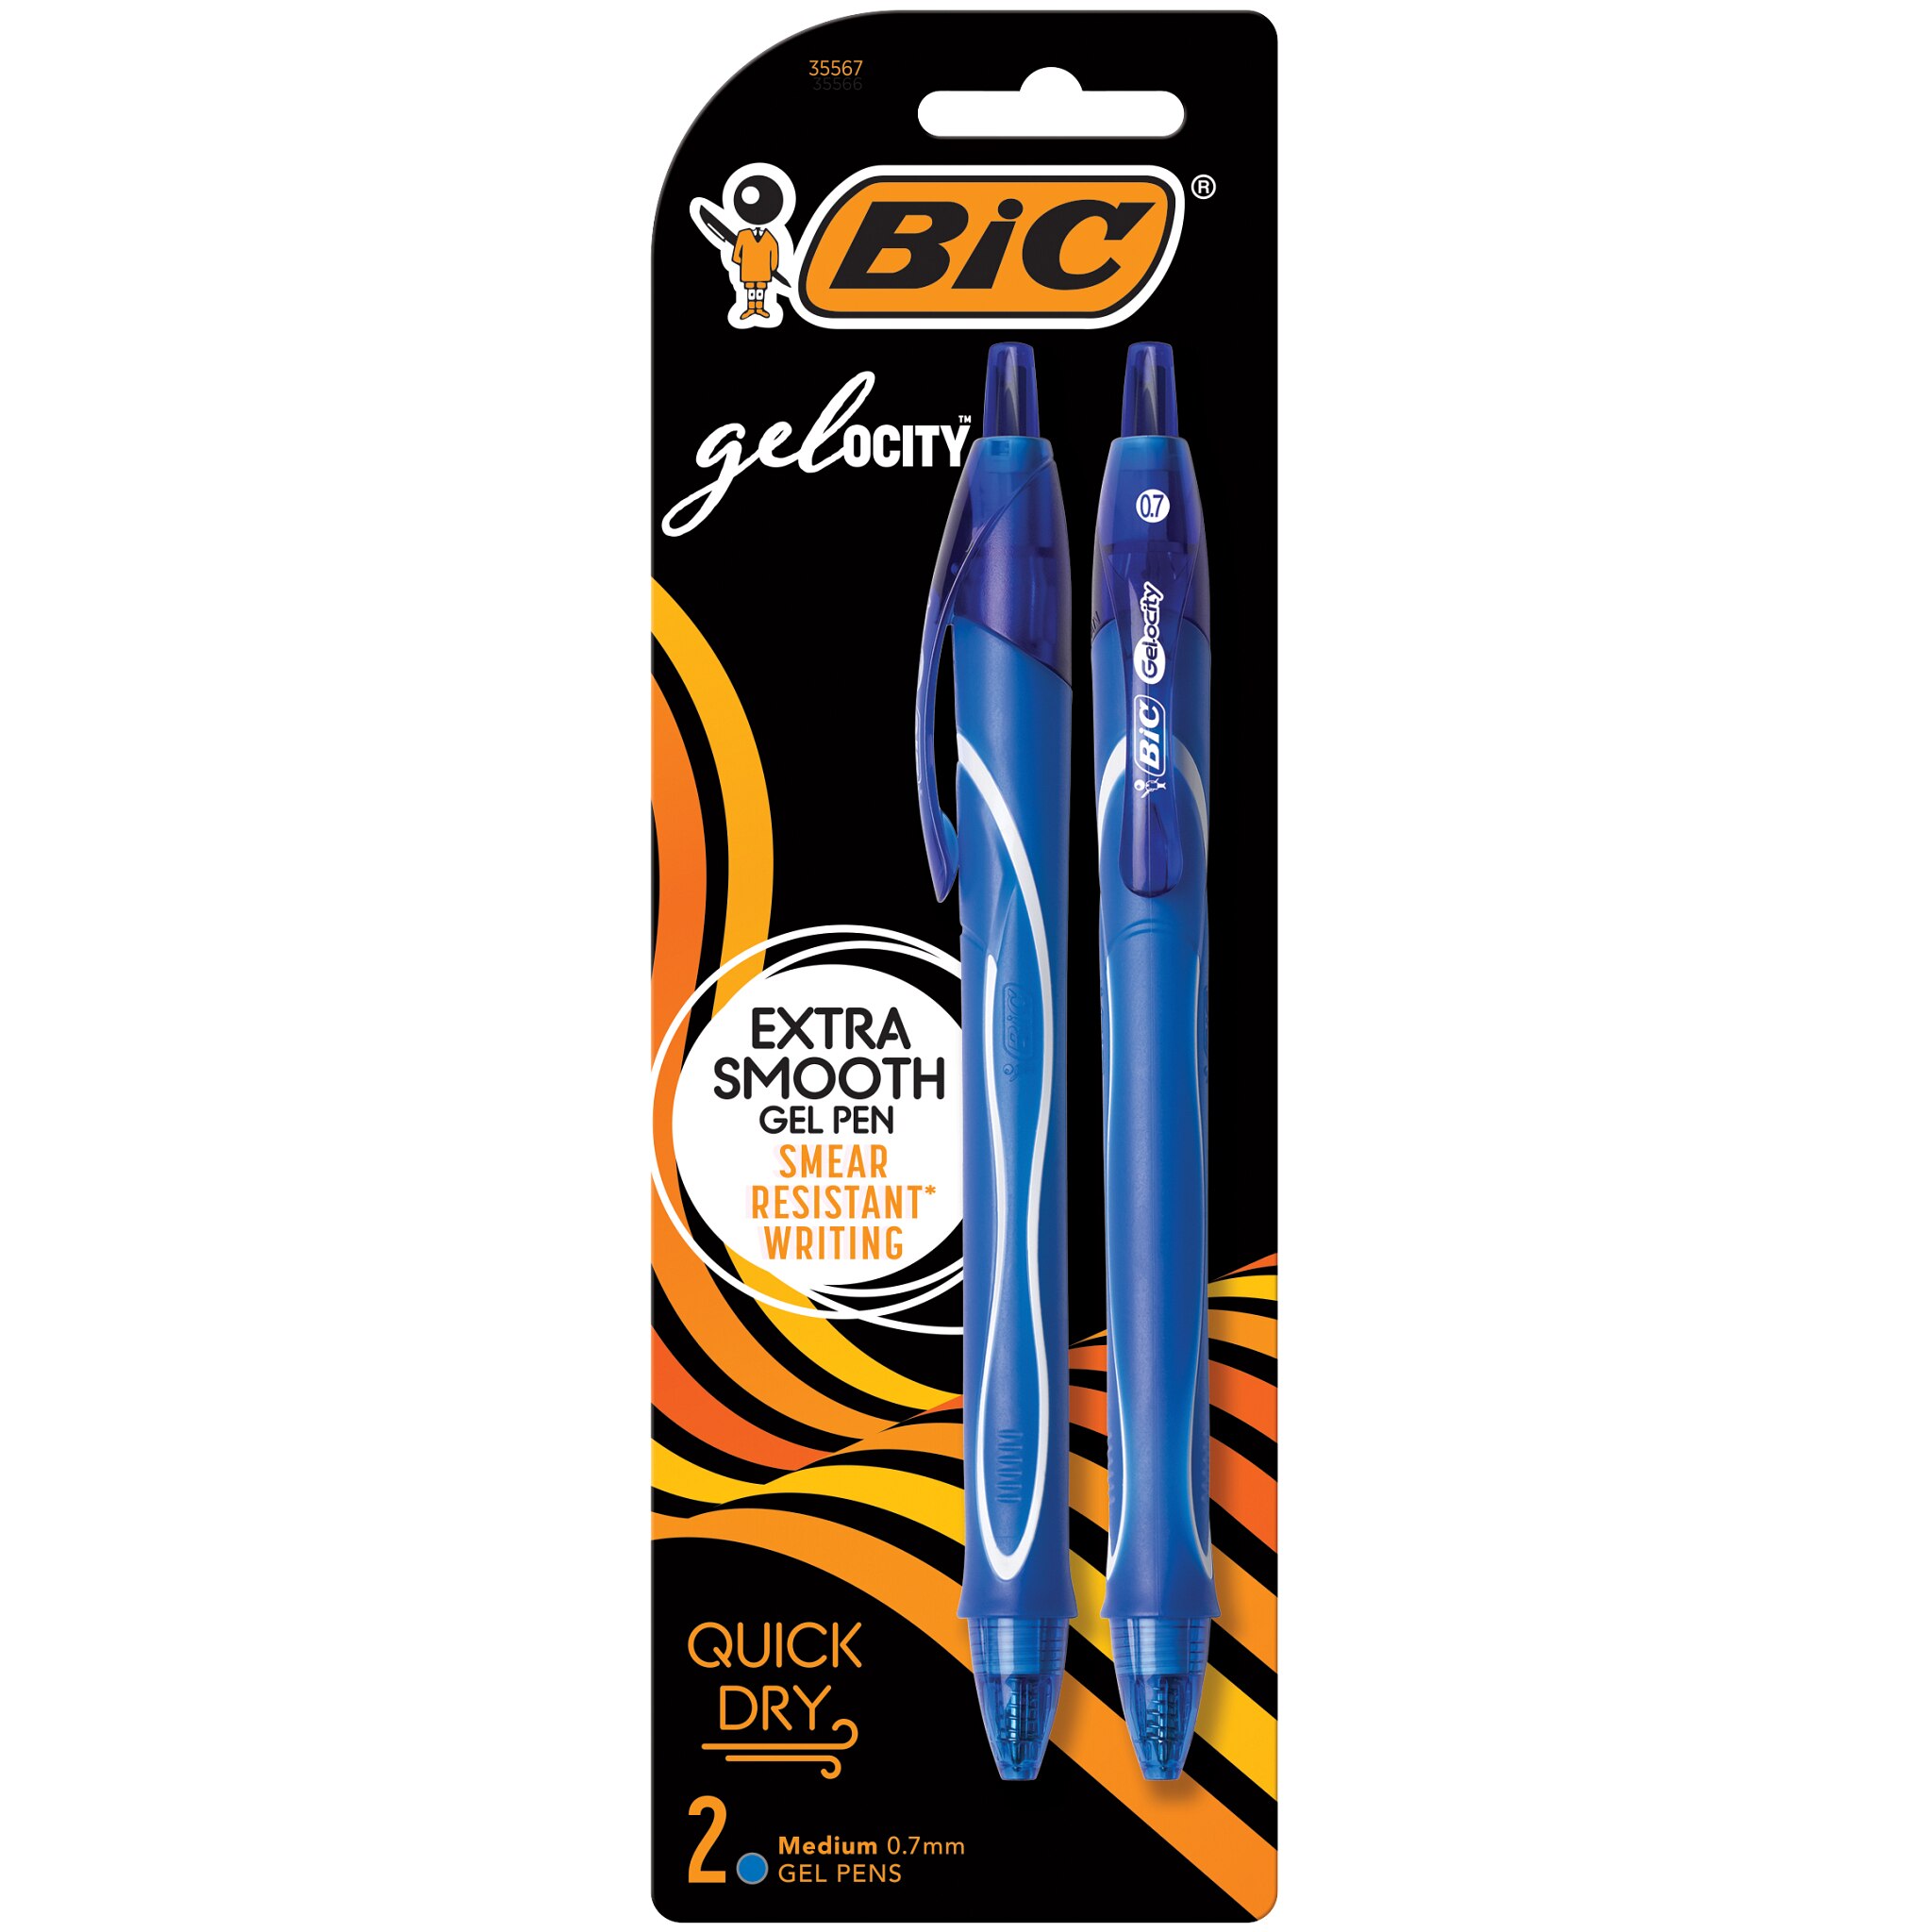 BIC Gel-ocity Quick Dry Retractable Gel Pen, Medium Point (0.7mm) Blue, Pack of 4